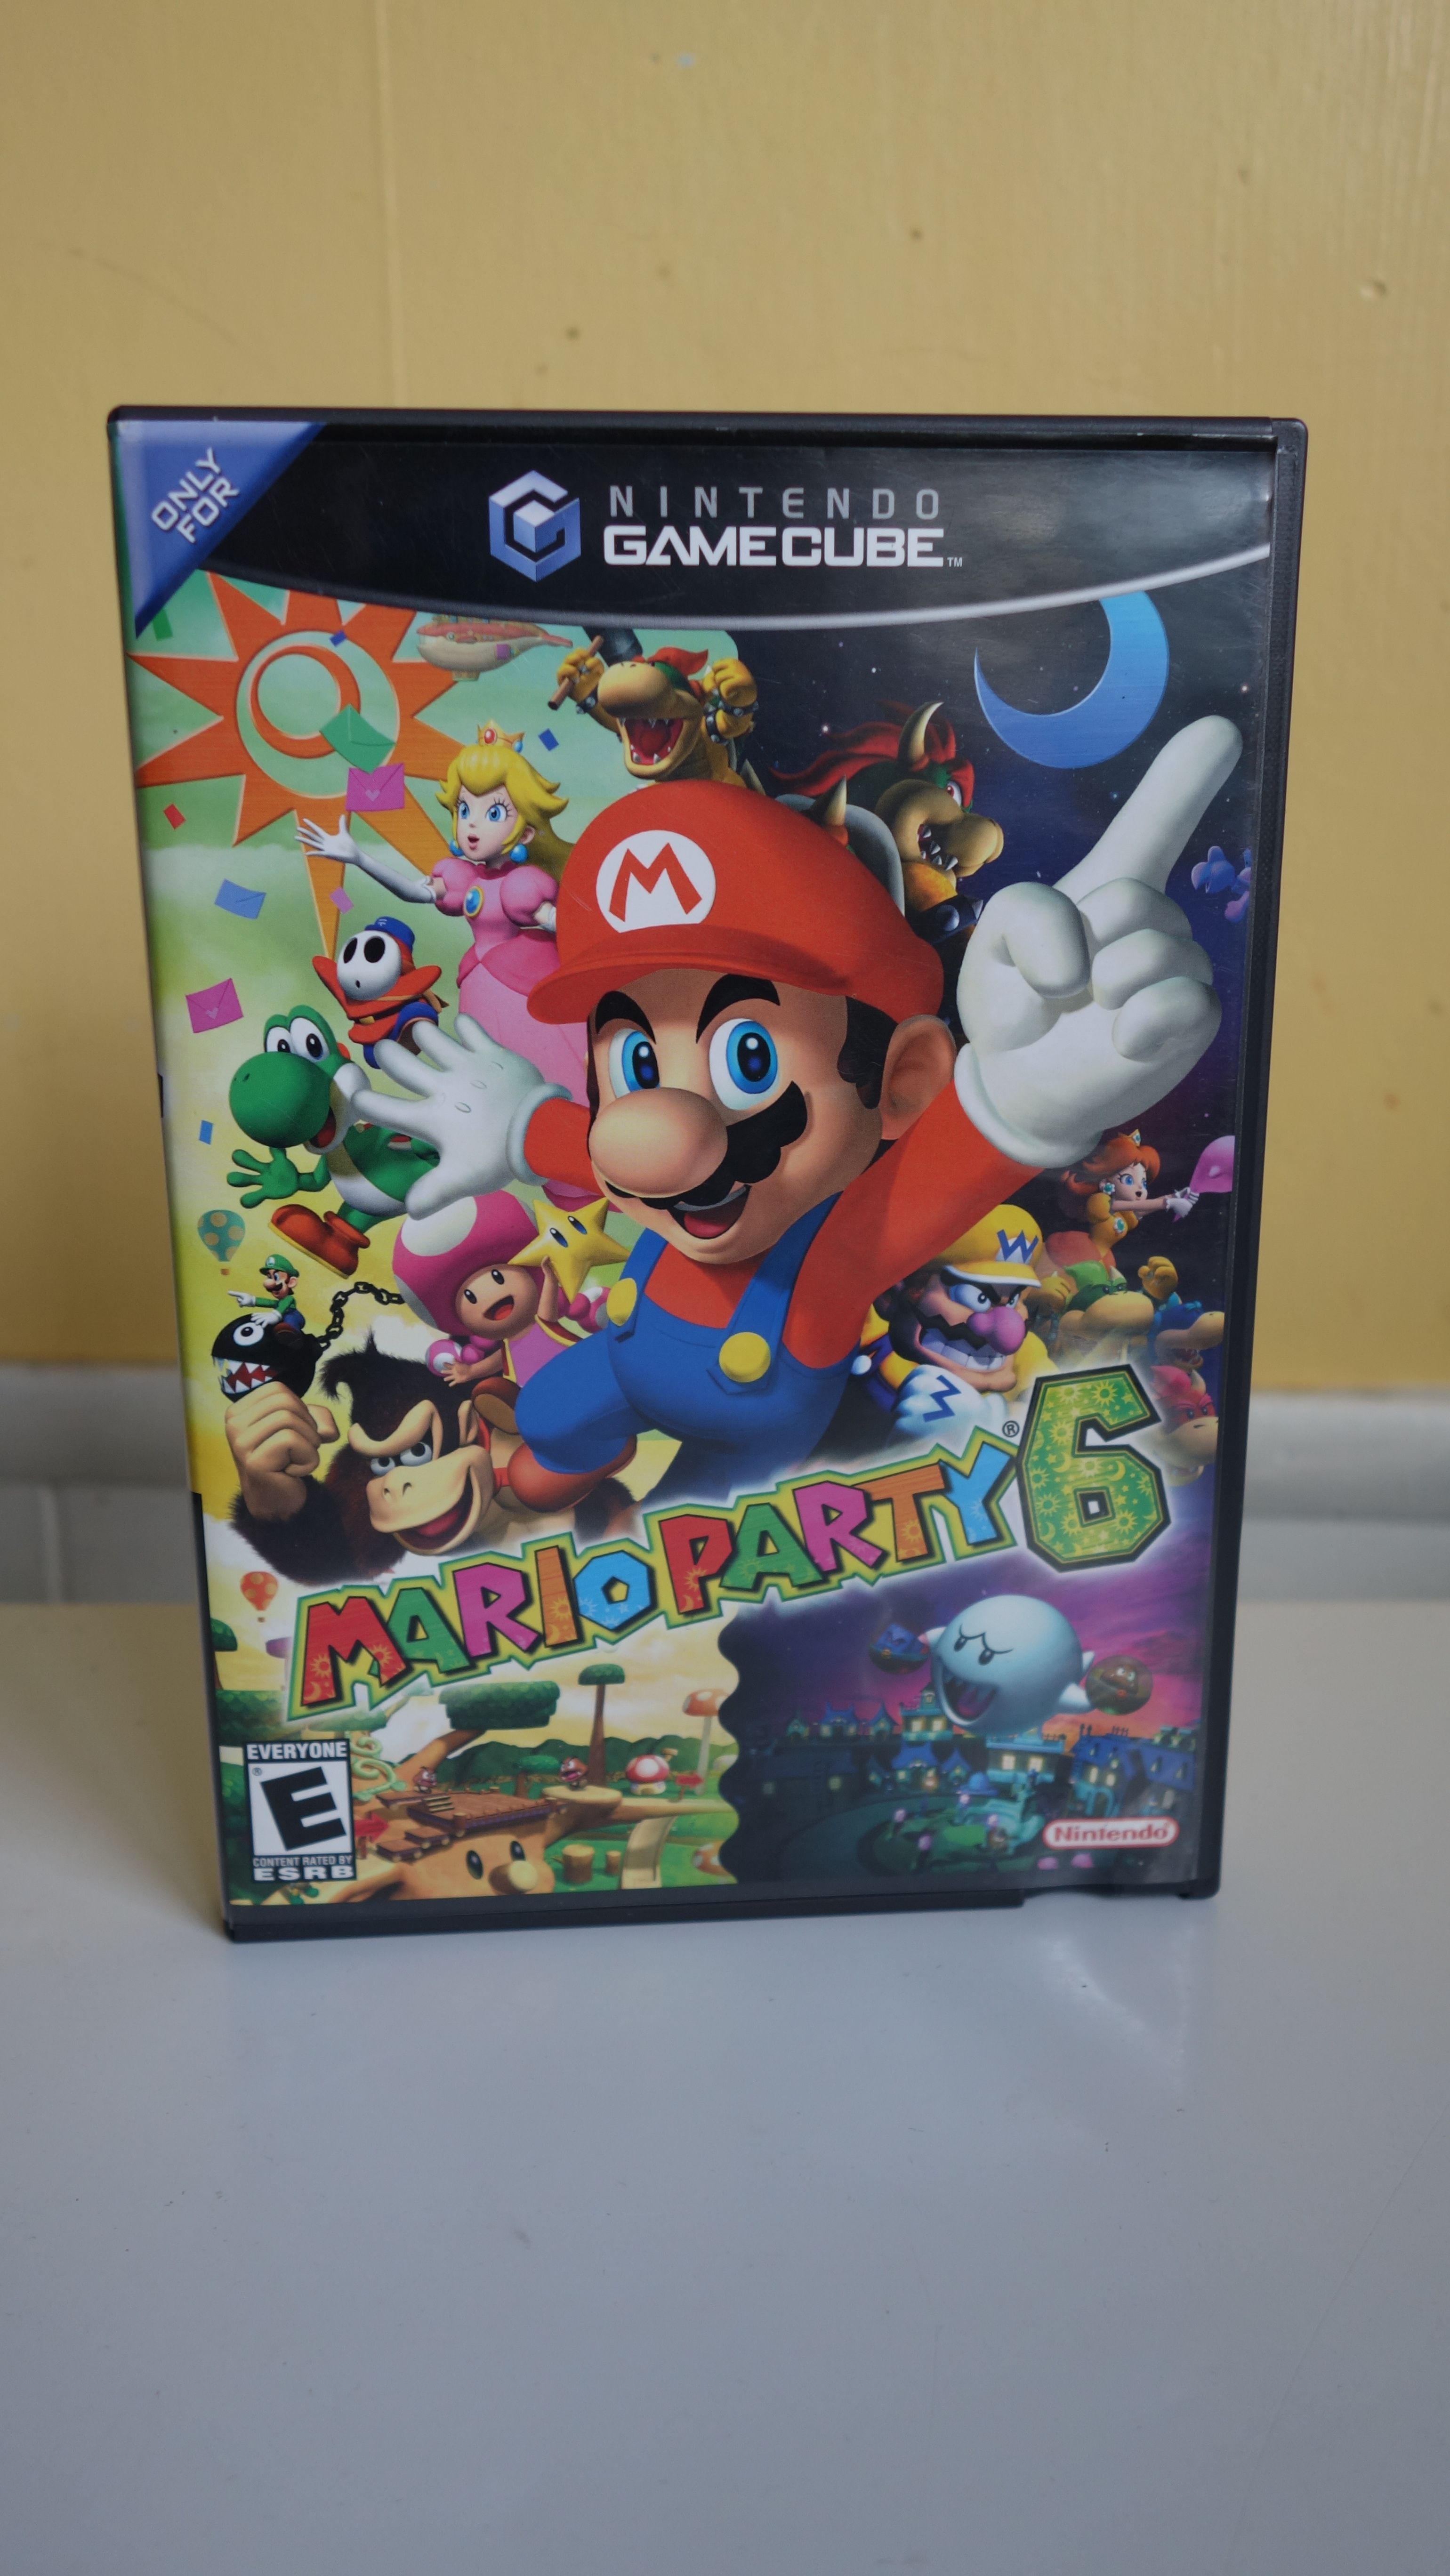 Nintendo Gamecube Mario Party 6 (Complete) in excellent condition